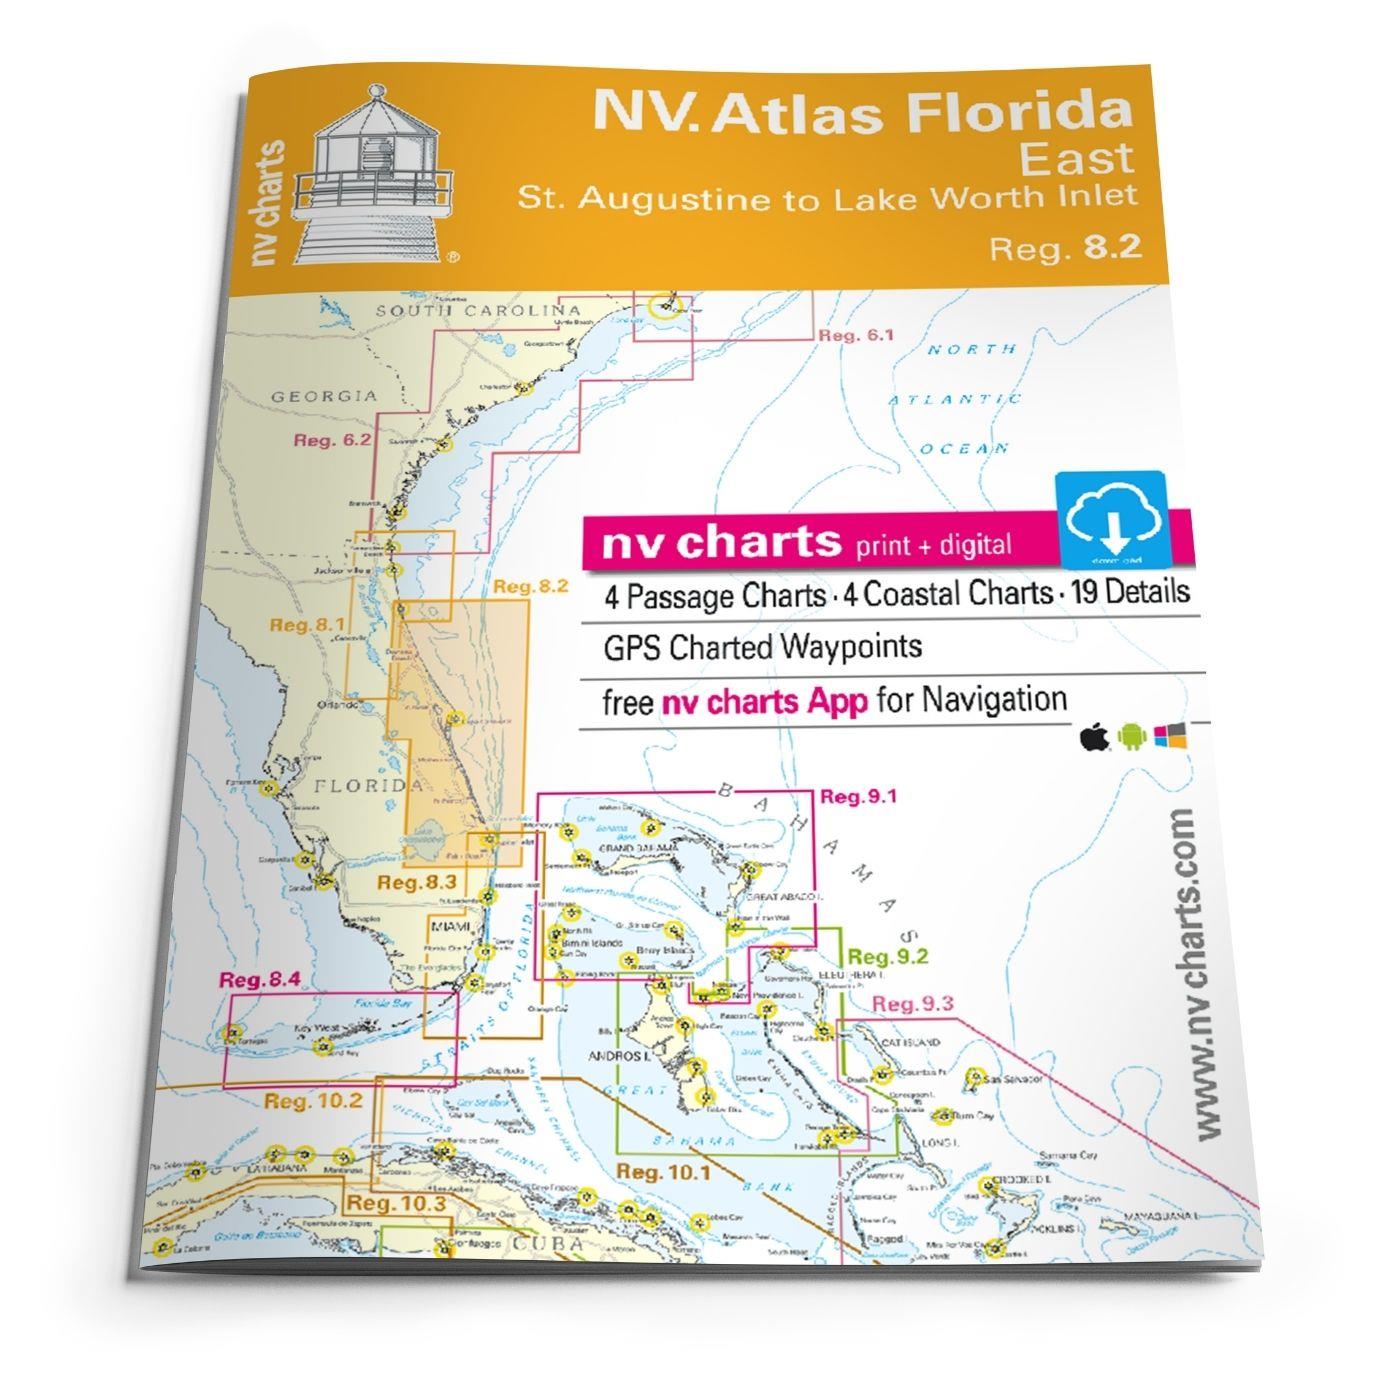 NV Atlas Florida, East Reg. 8.2 - St. Augustine to Lake Worth Inlet